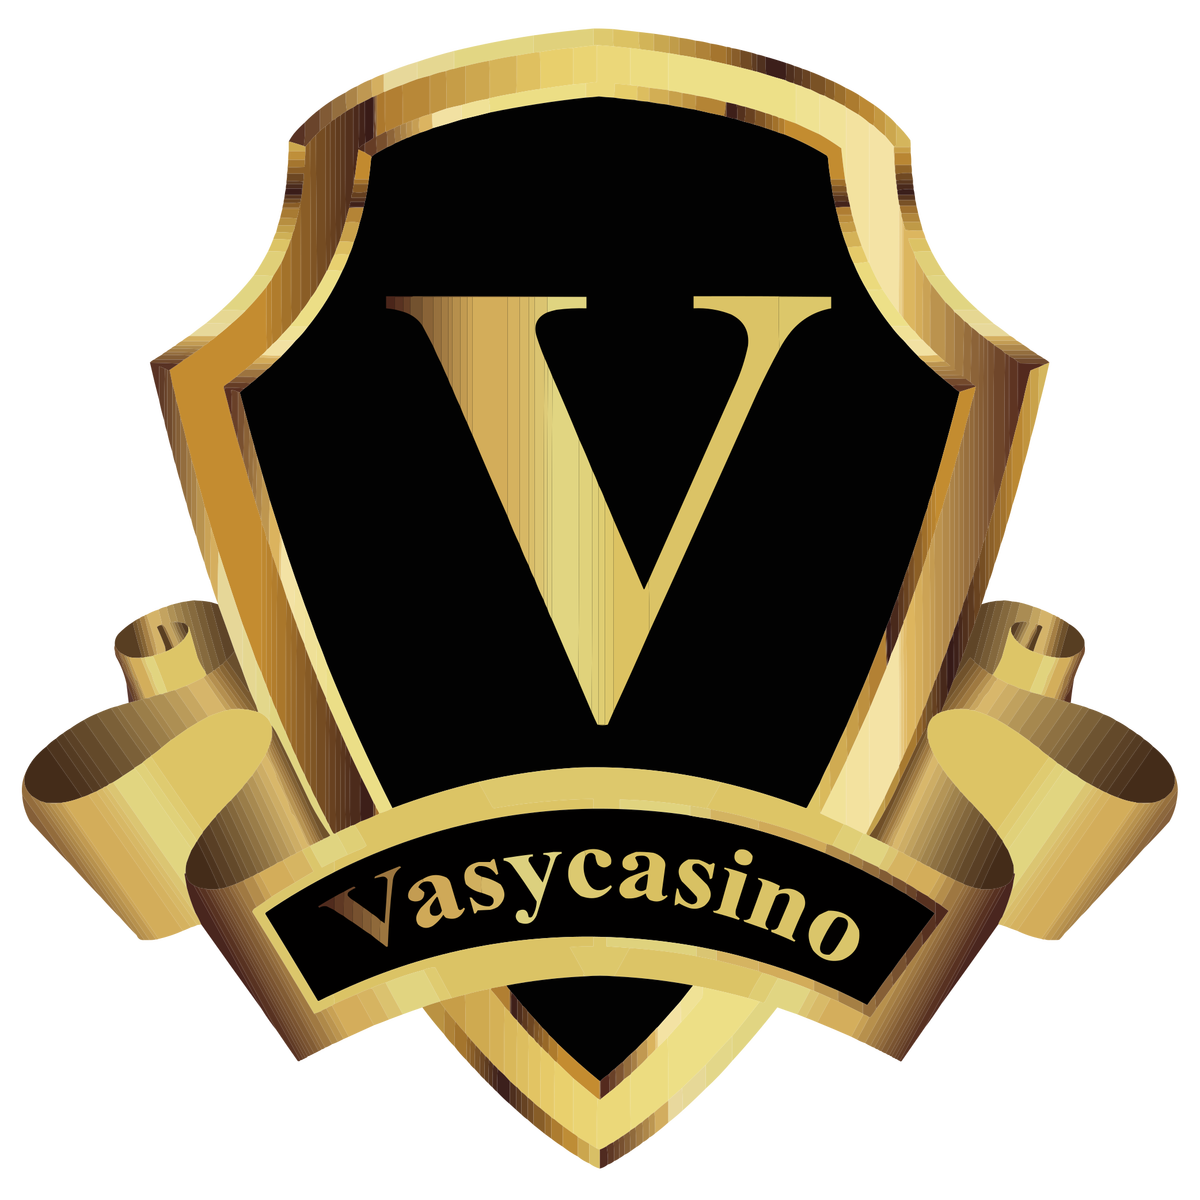 Vasy Review